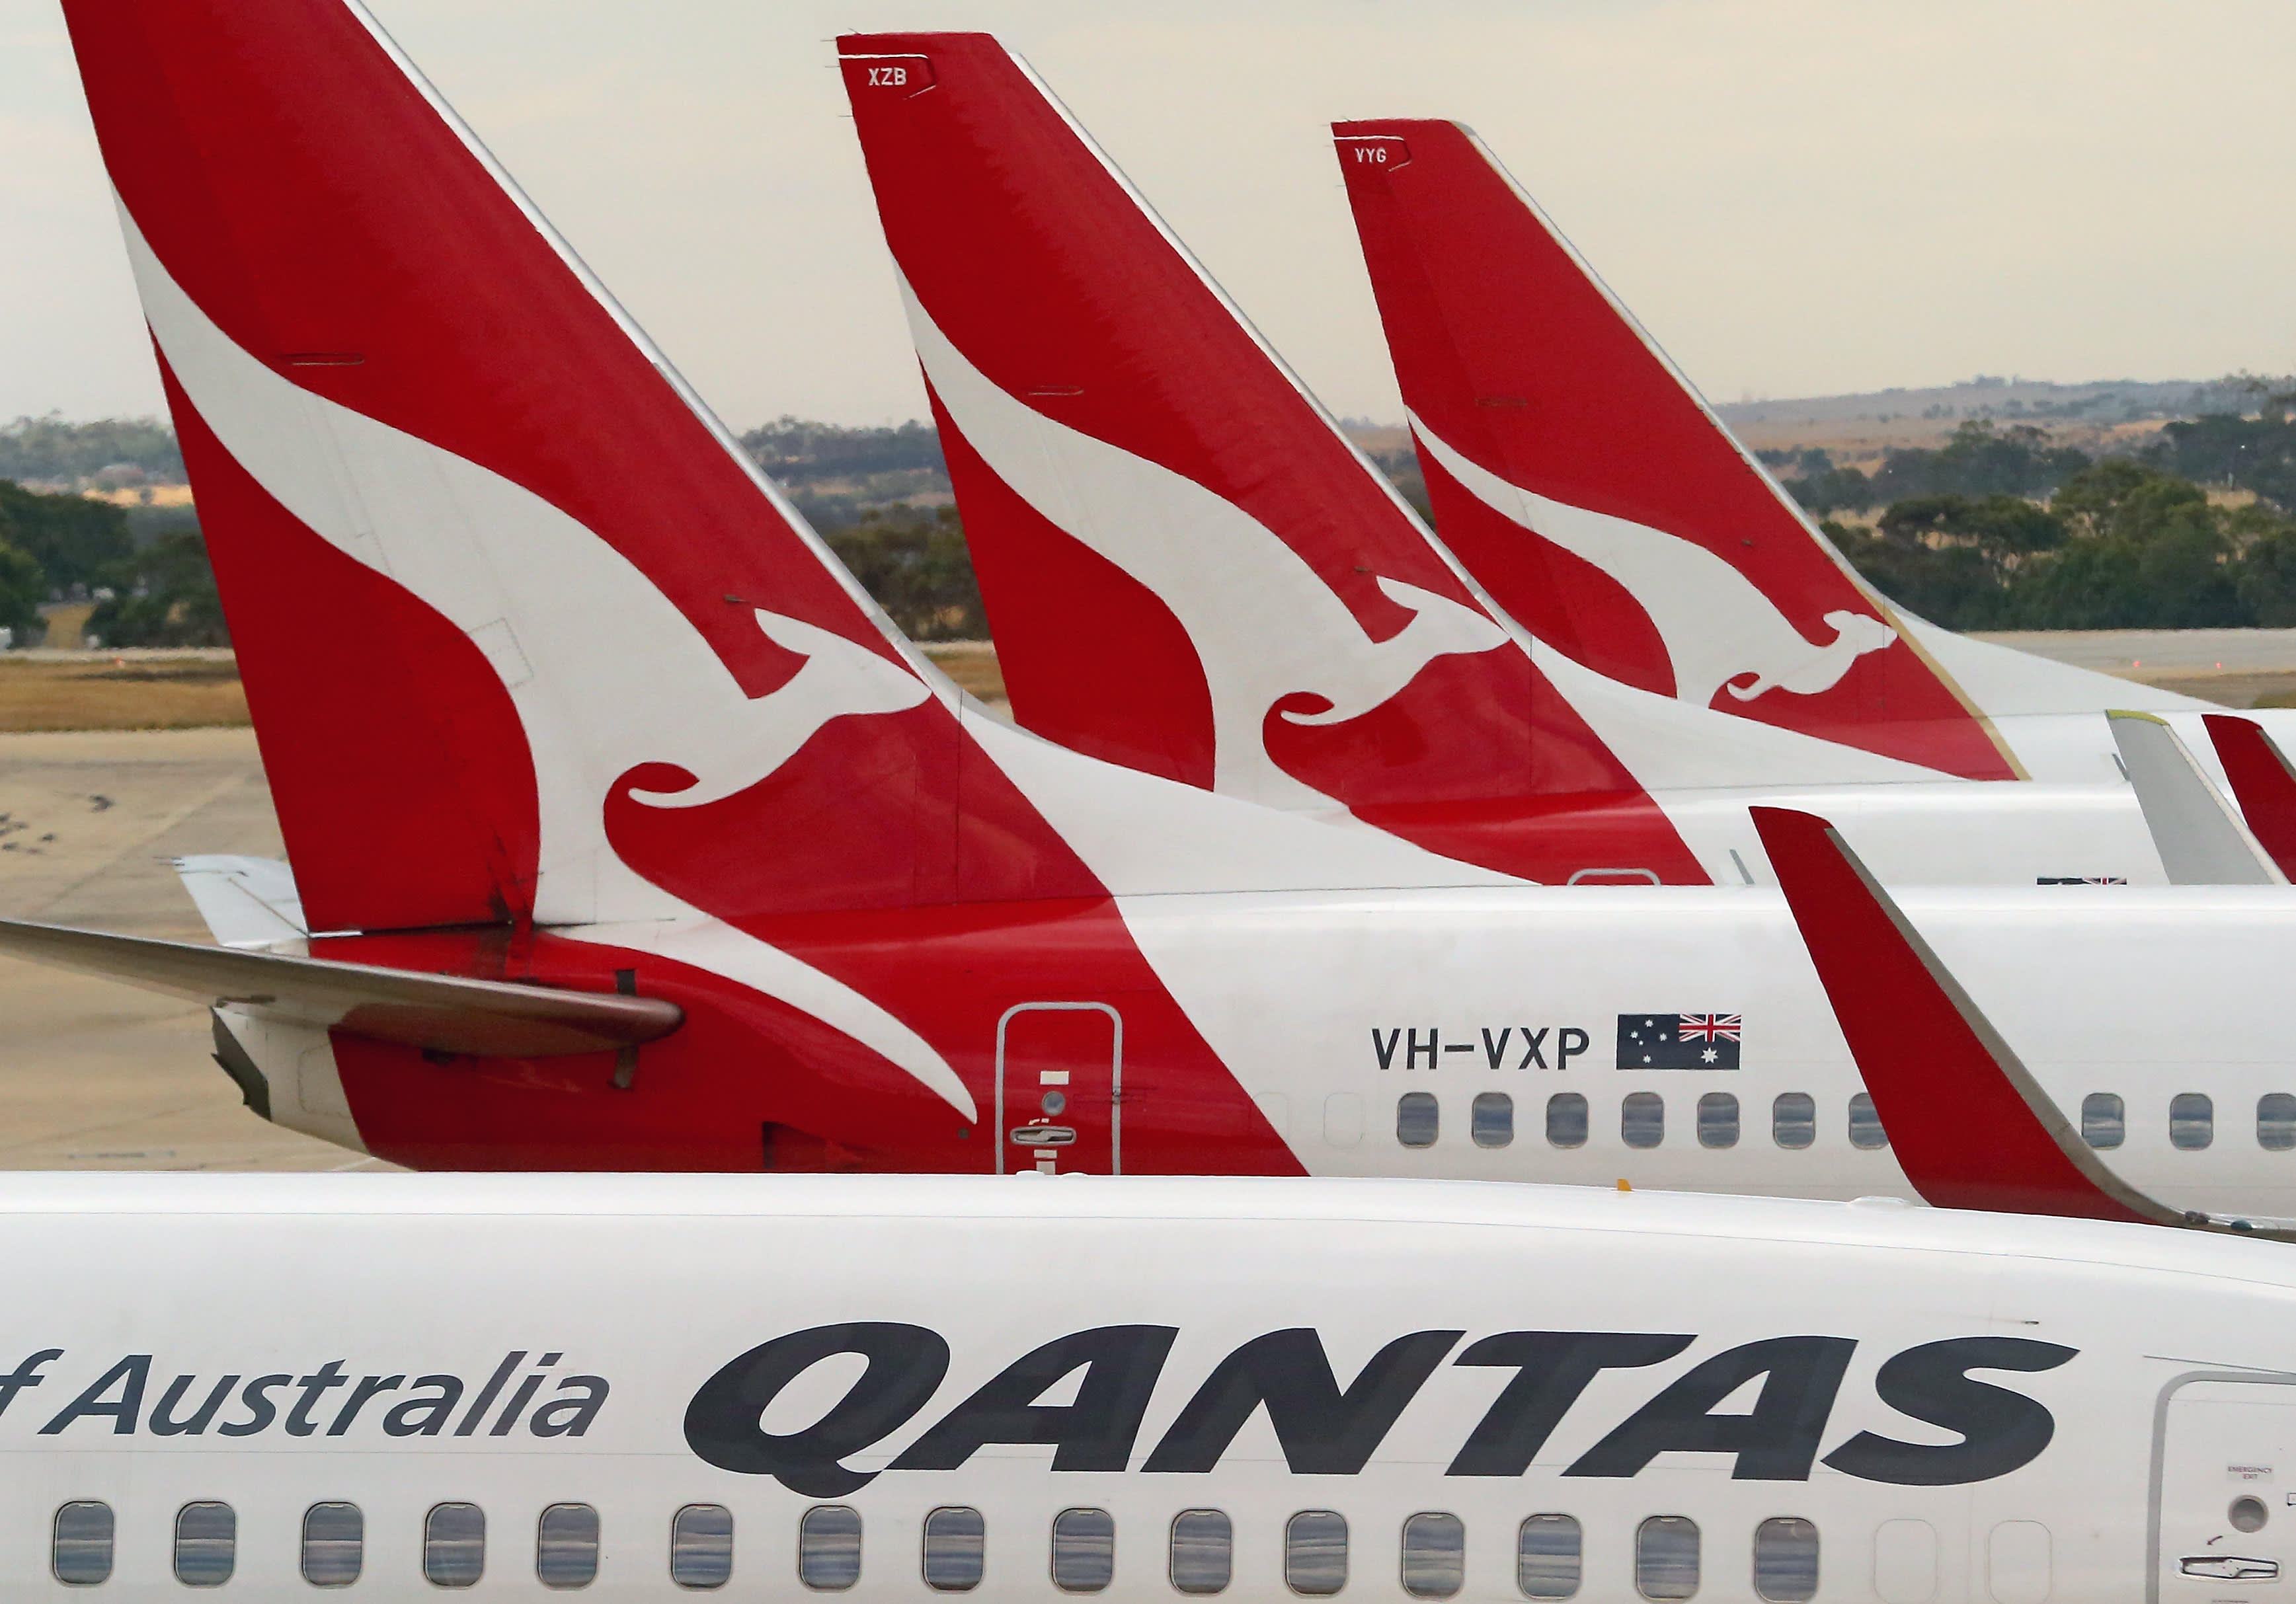 Australia's Qantas hopes to resume international flights by Christmas, CEO says